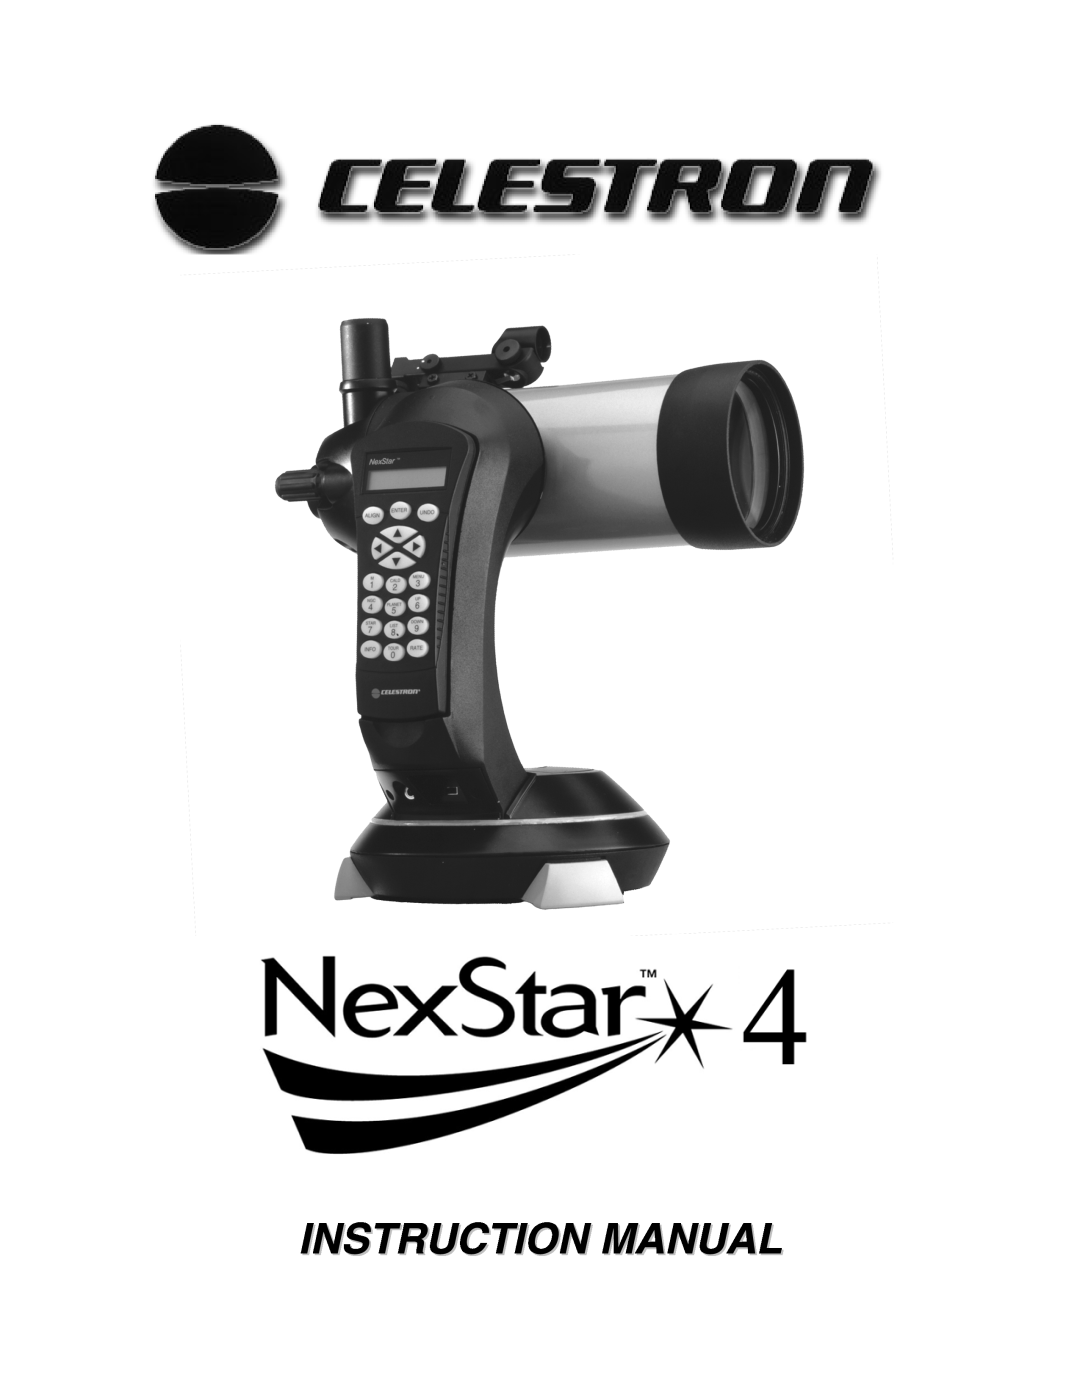 Celestron NexStar HC manual Instruction Manual 